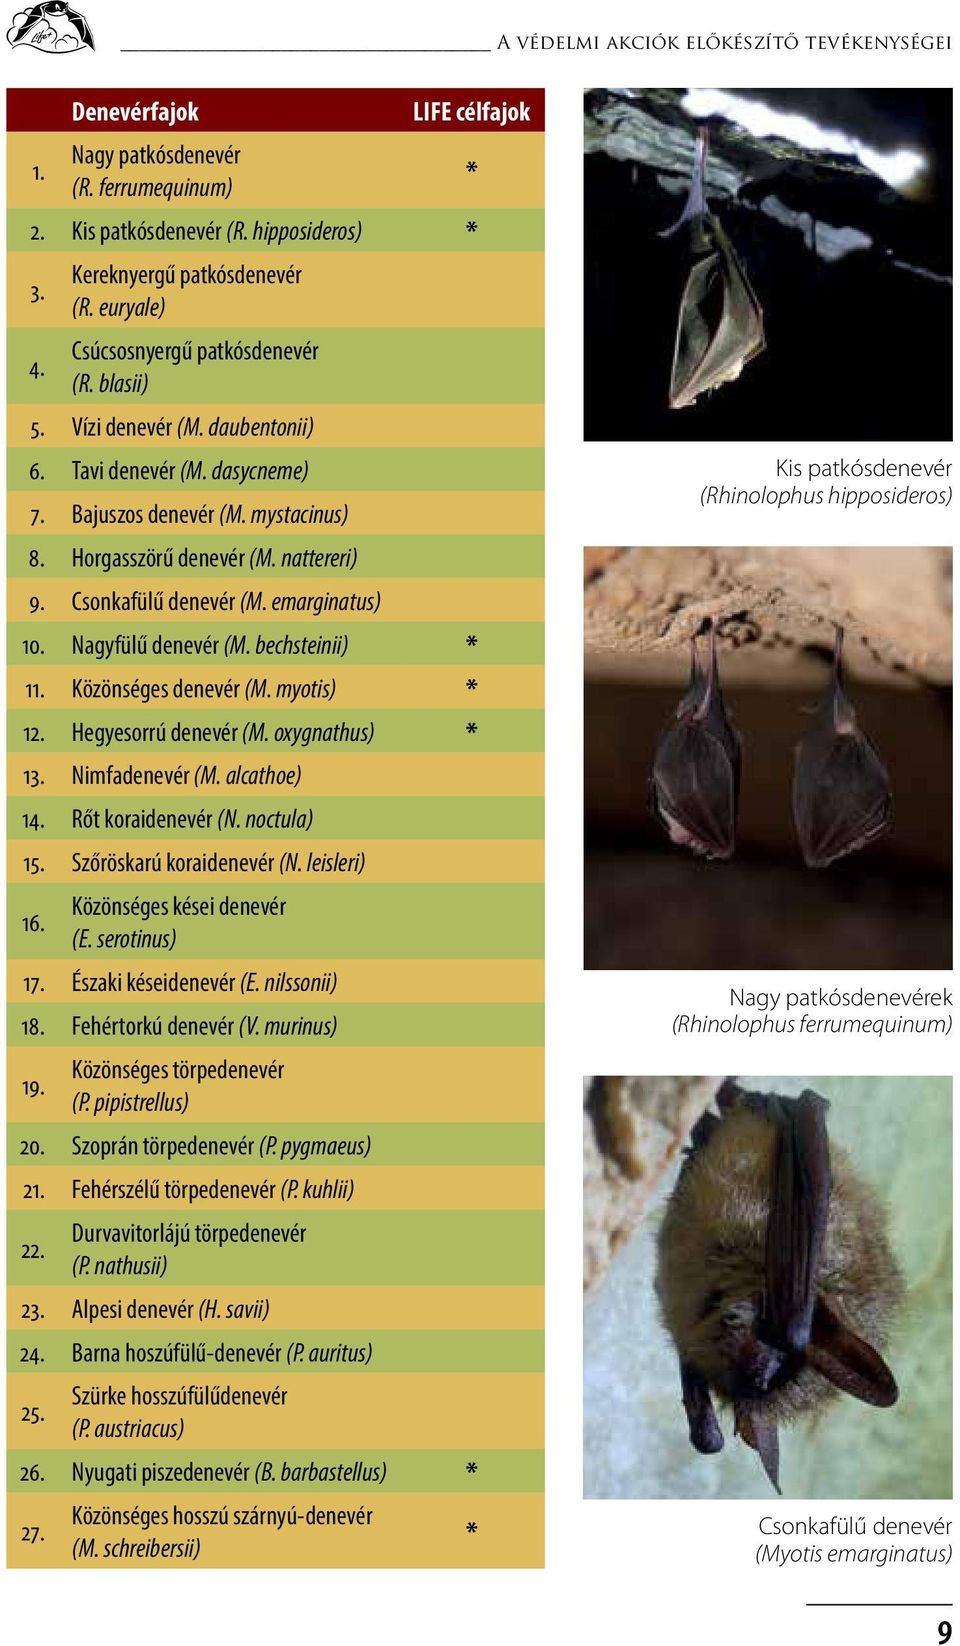 Csonkafülű denevér (M. emarginatus) 10. Nagyfülű denevér (M. bechsteinii) * 11. Közönséges denevér (M. myotis) * 12. Hegyesorrú denevér (M. oxygnathus) * 13. Nimfadenevér (M. alcathoe) 14.